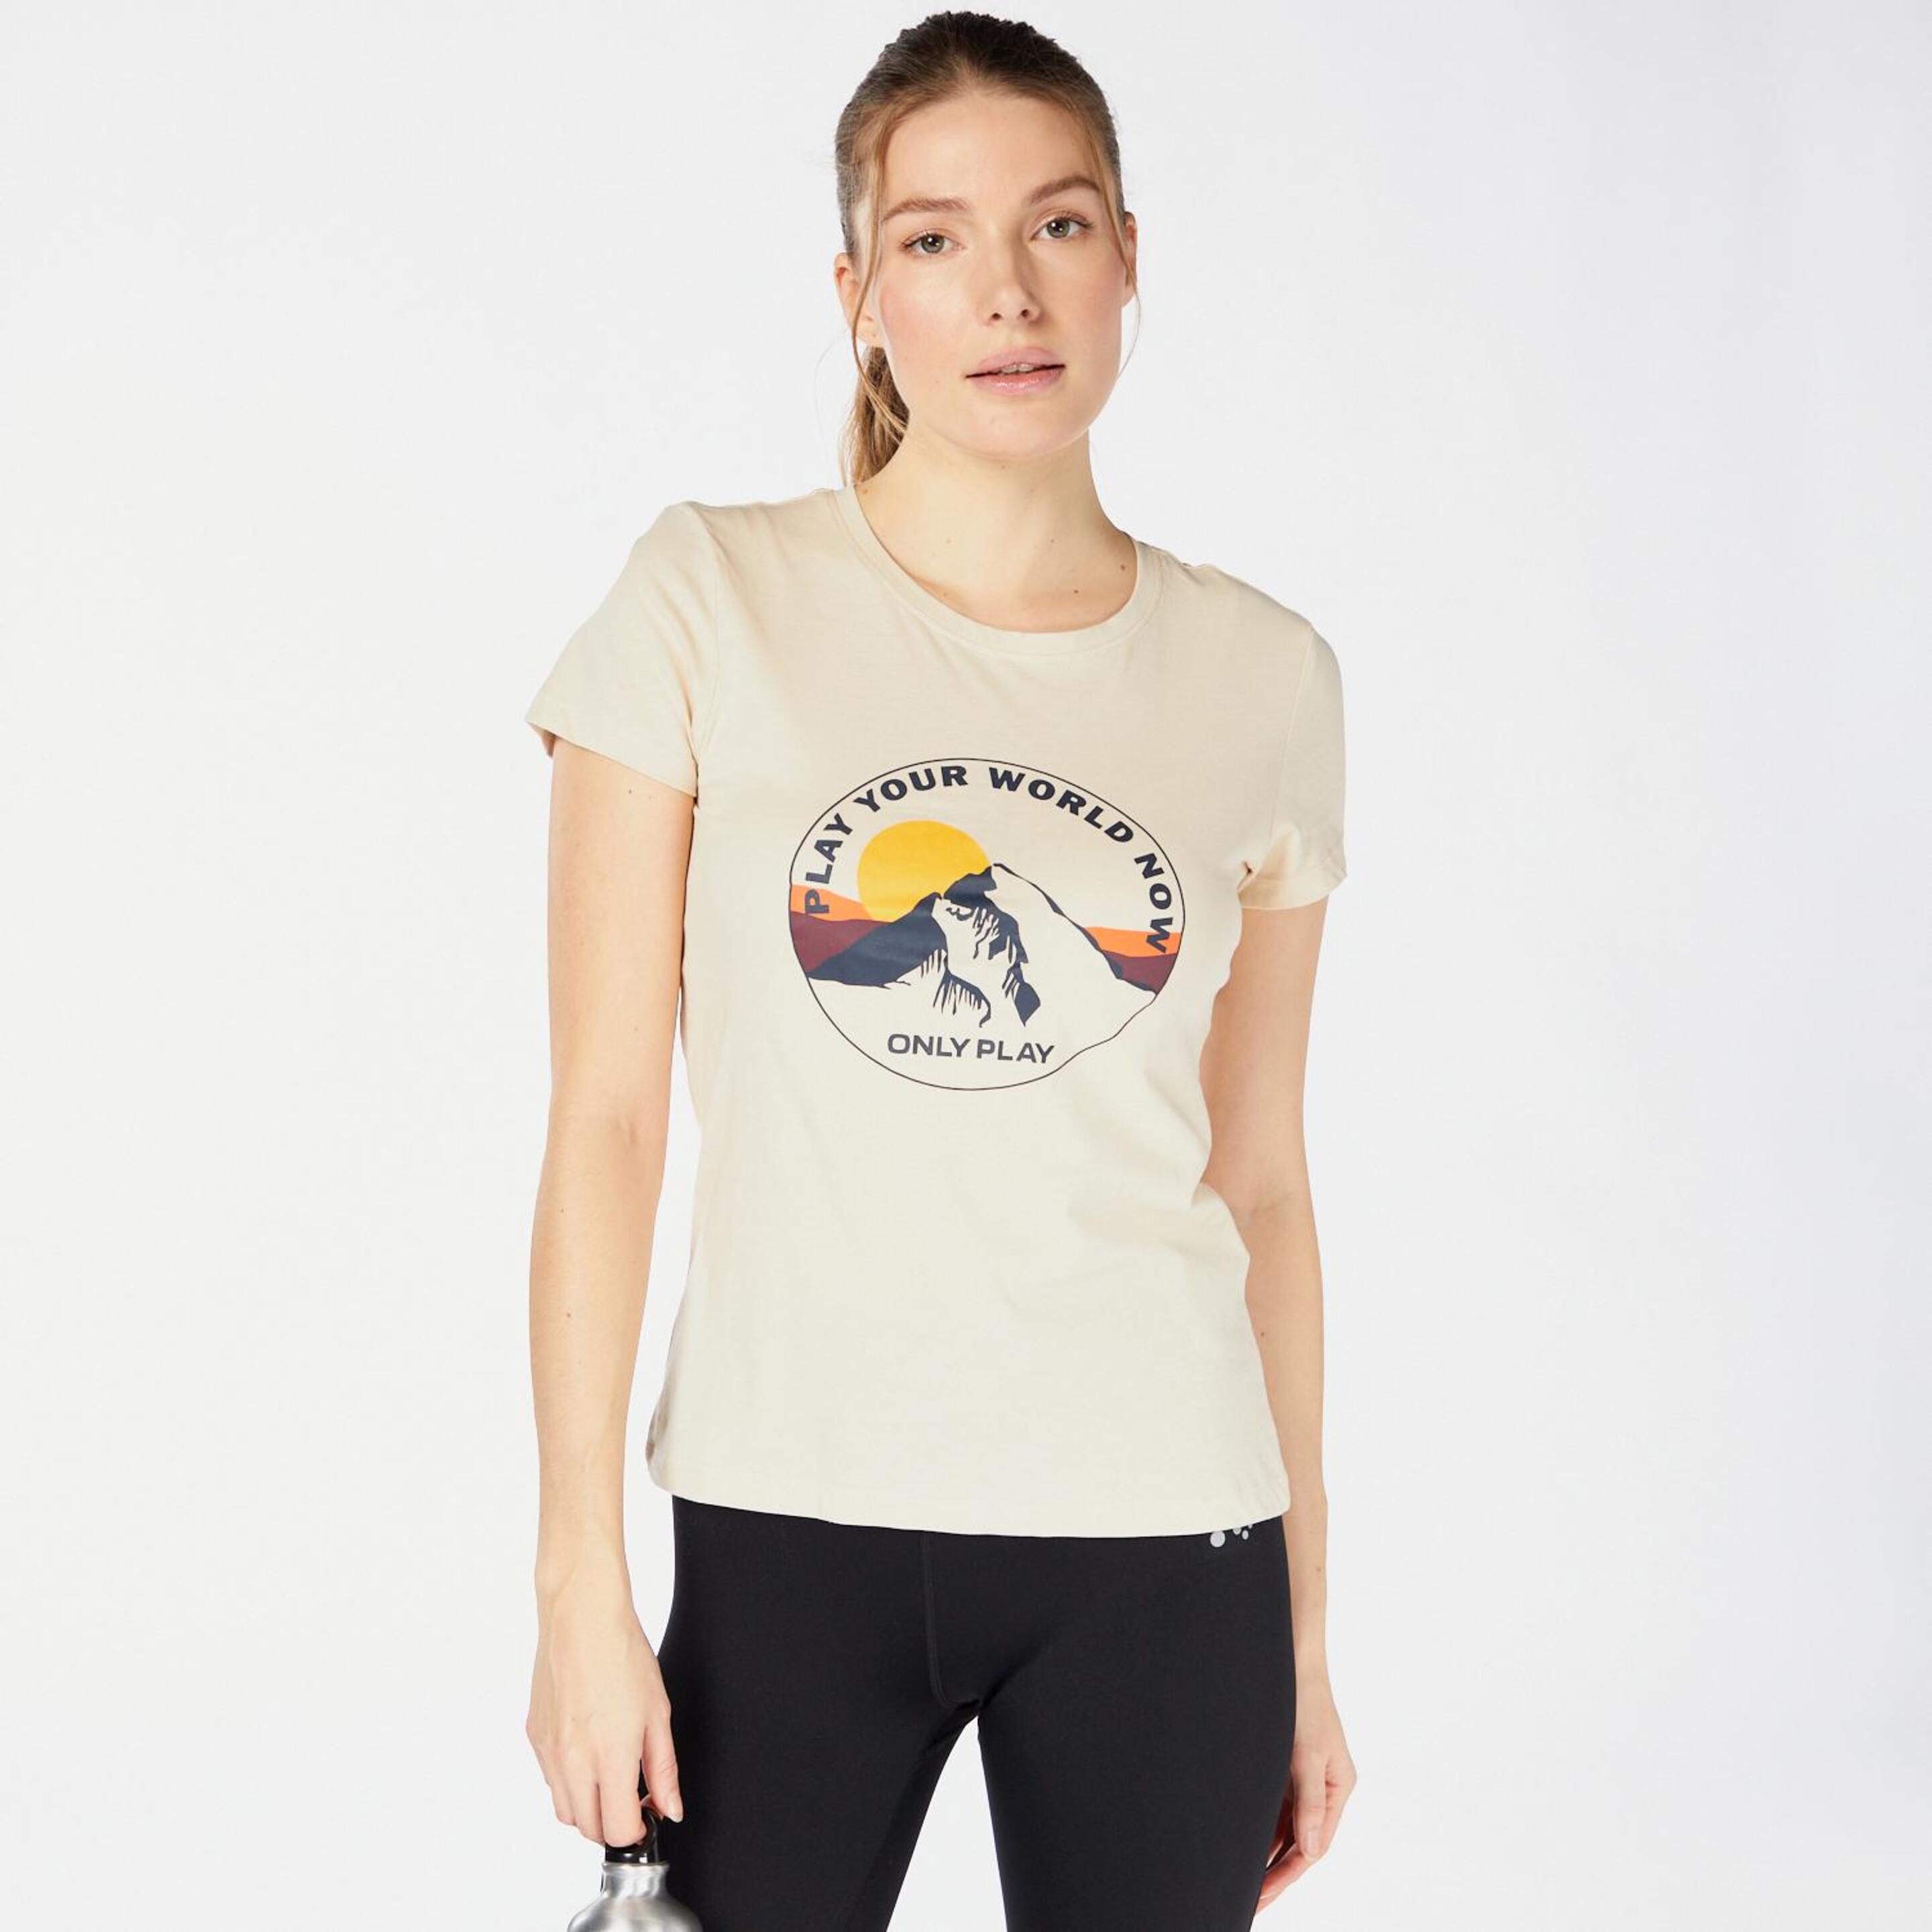 ONLY Play World - blanco - Camiseta Trekking Mujer